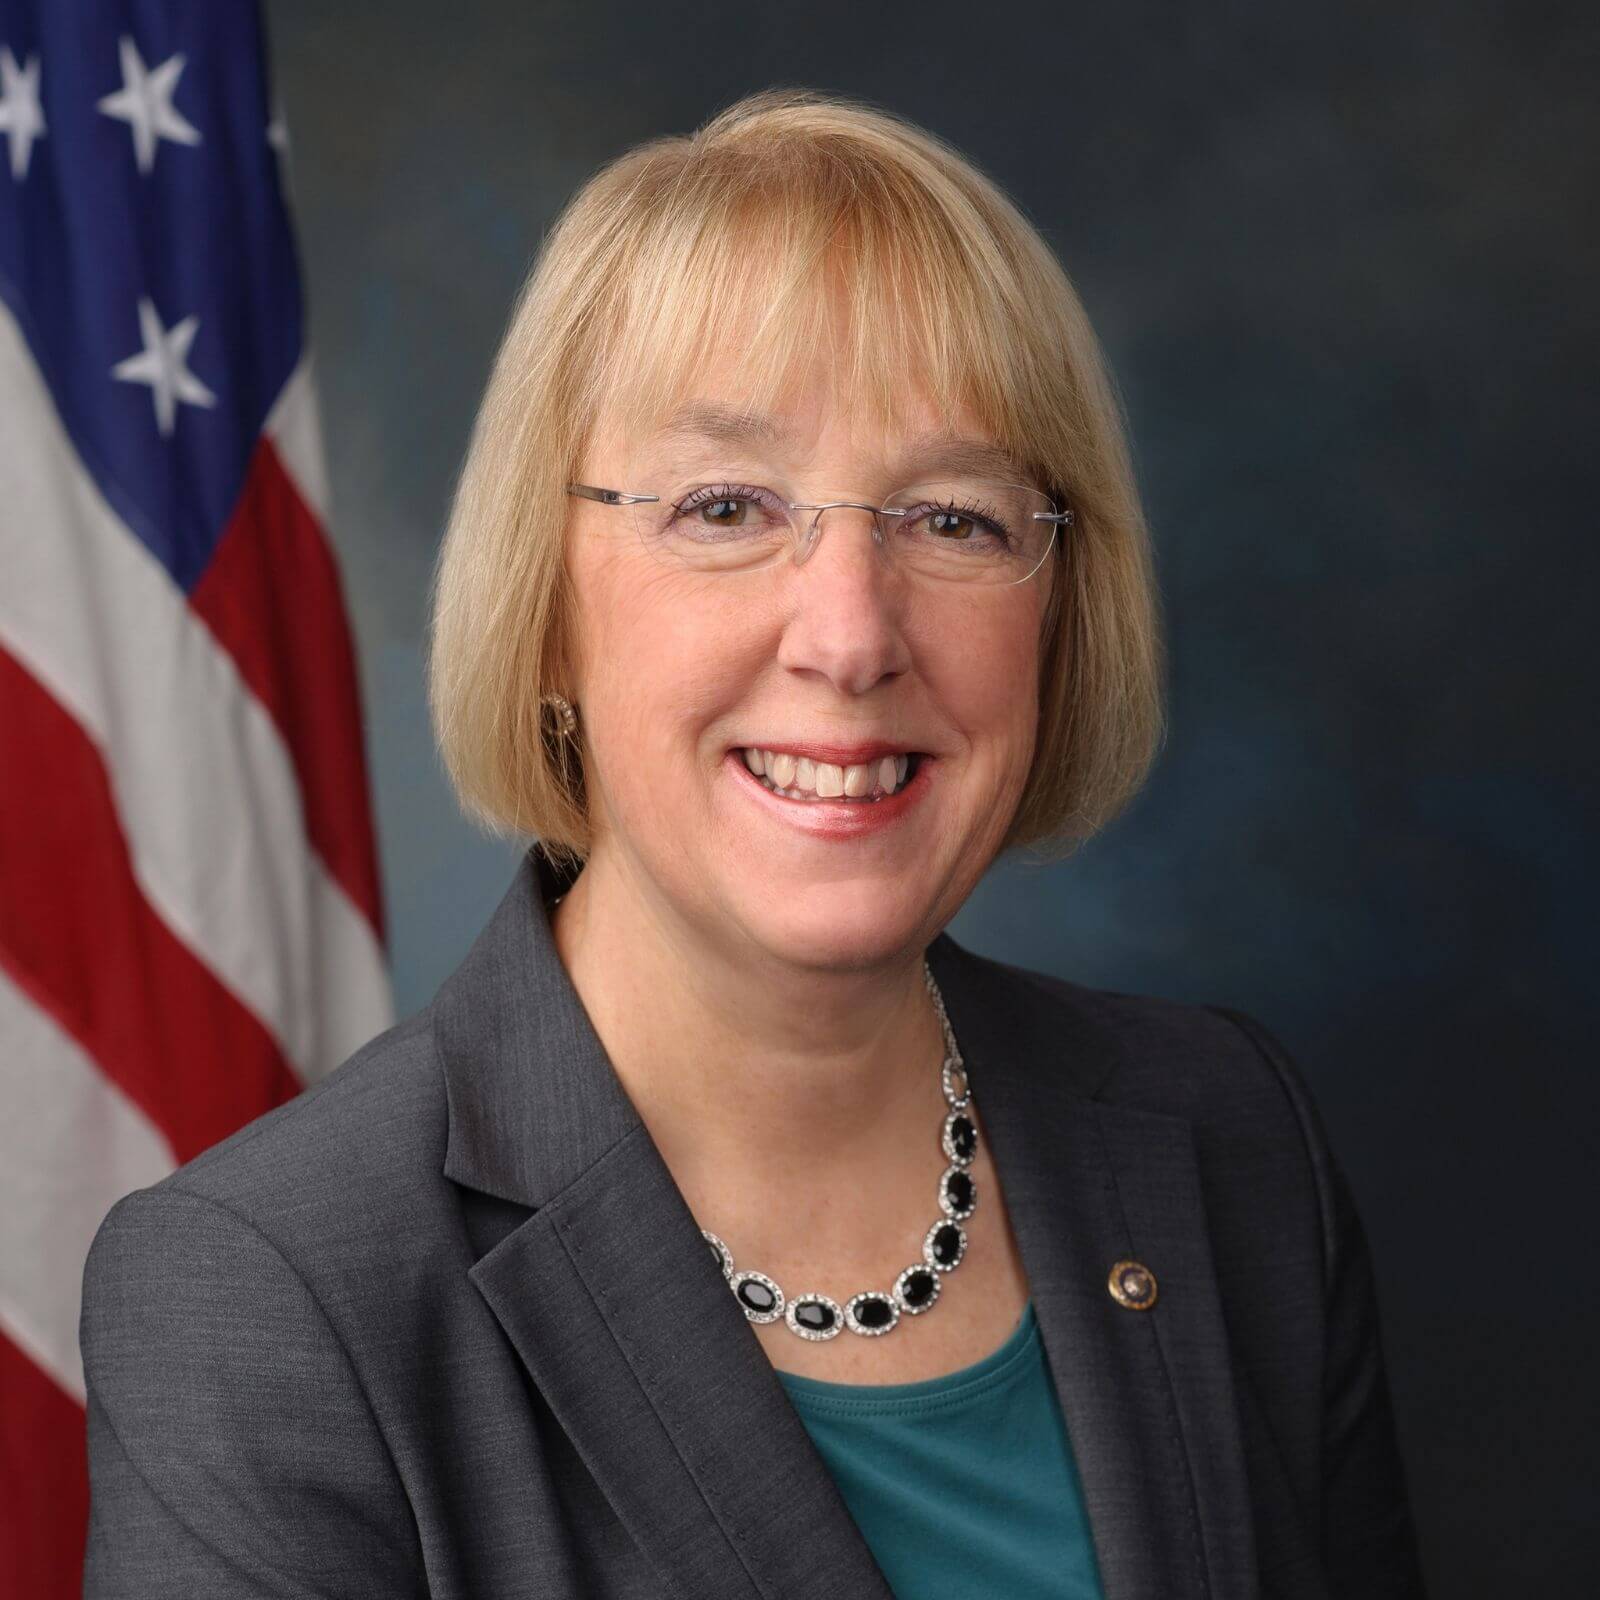 Senator Patty Murray